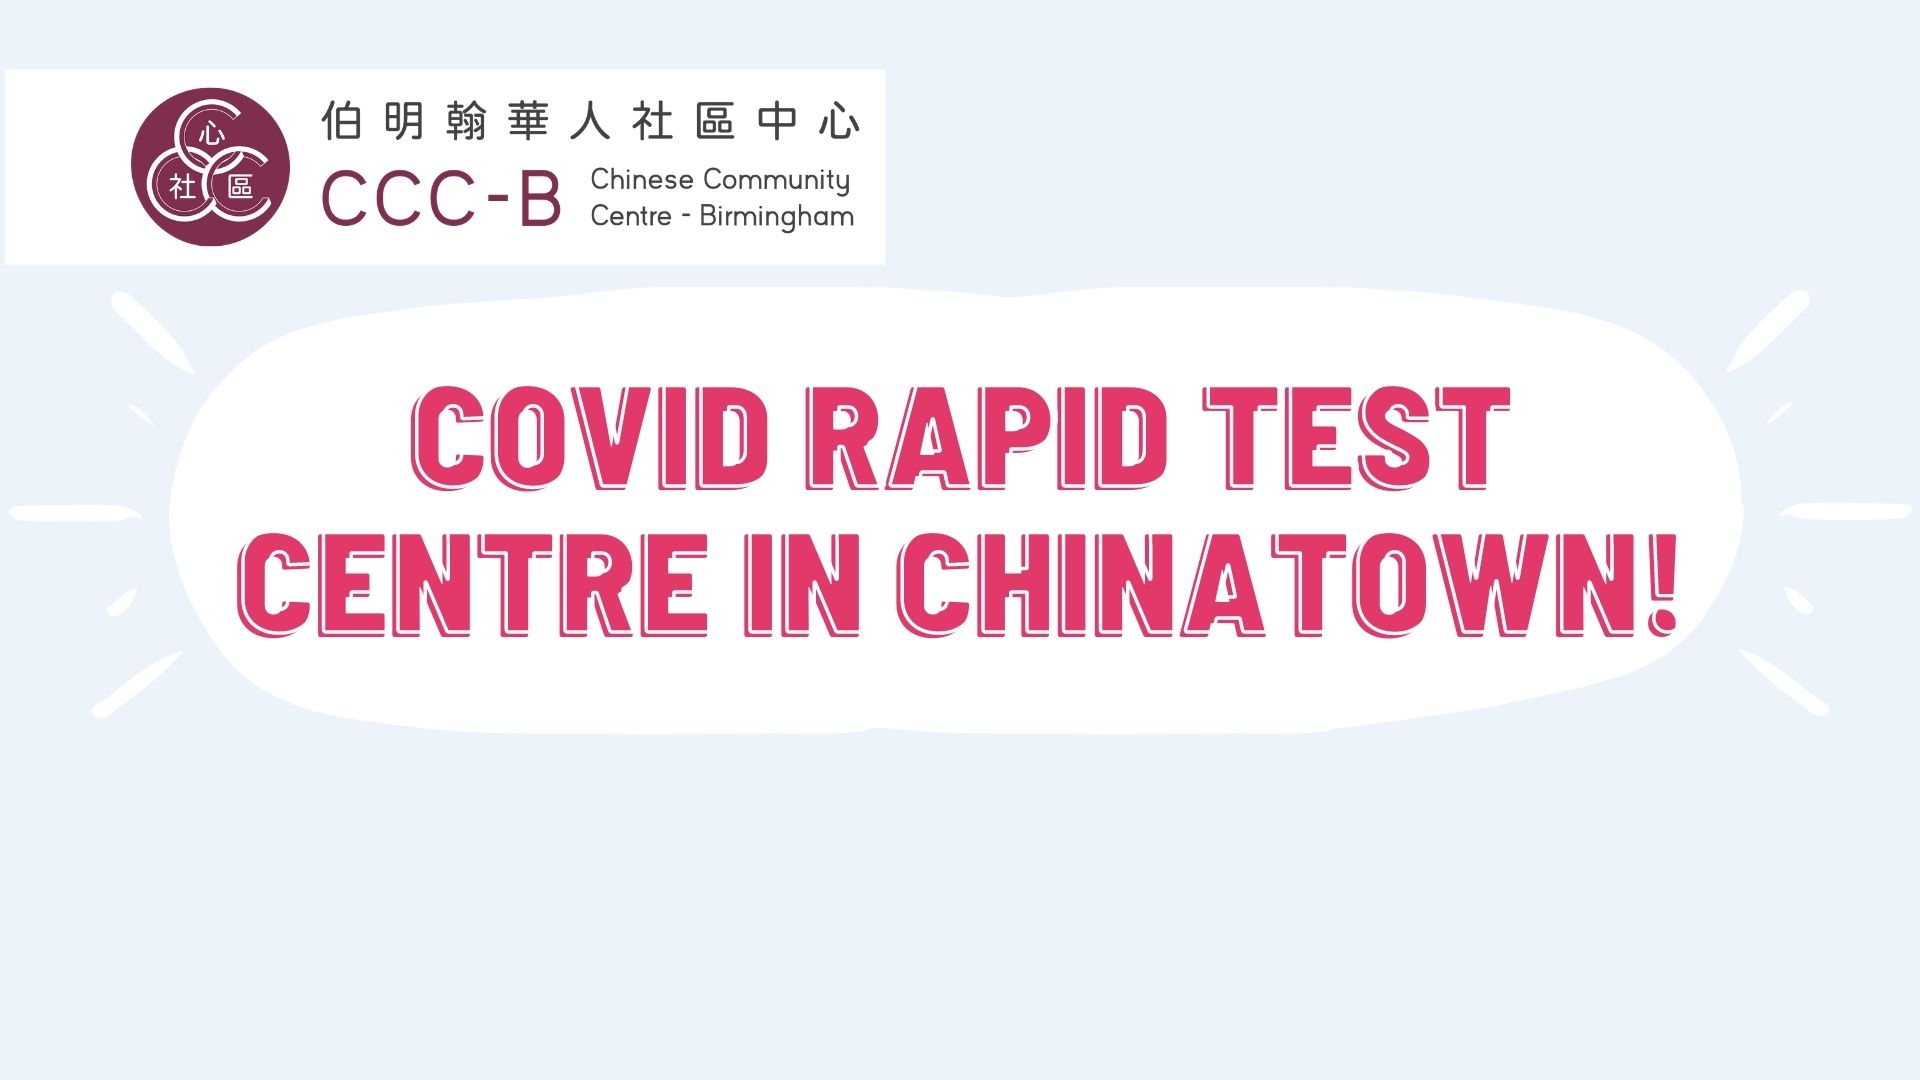 COVID RAPID TEST CENTRE IN CHINATOWN